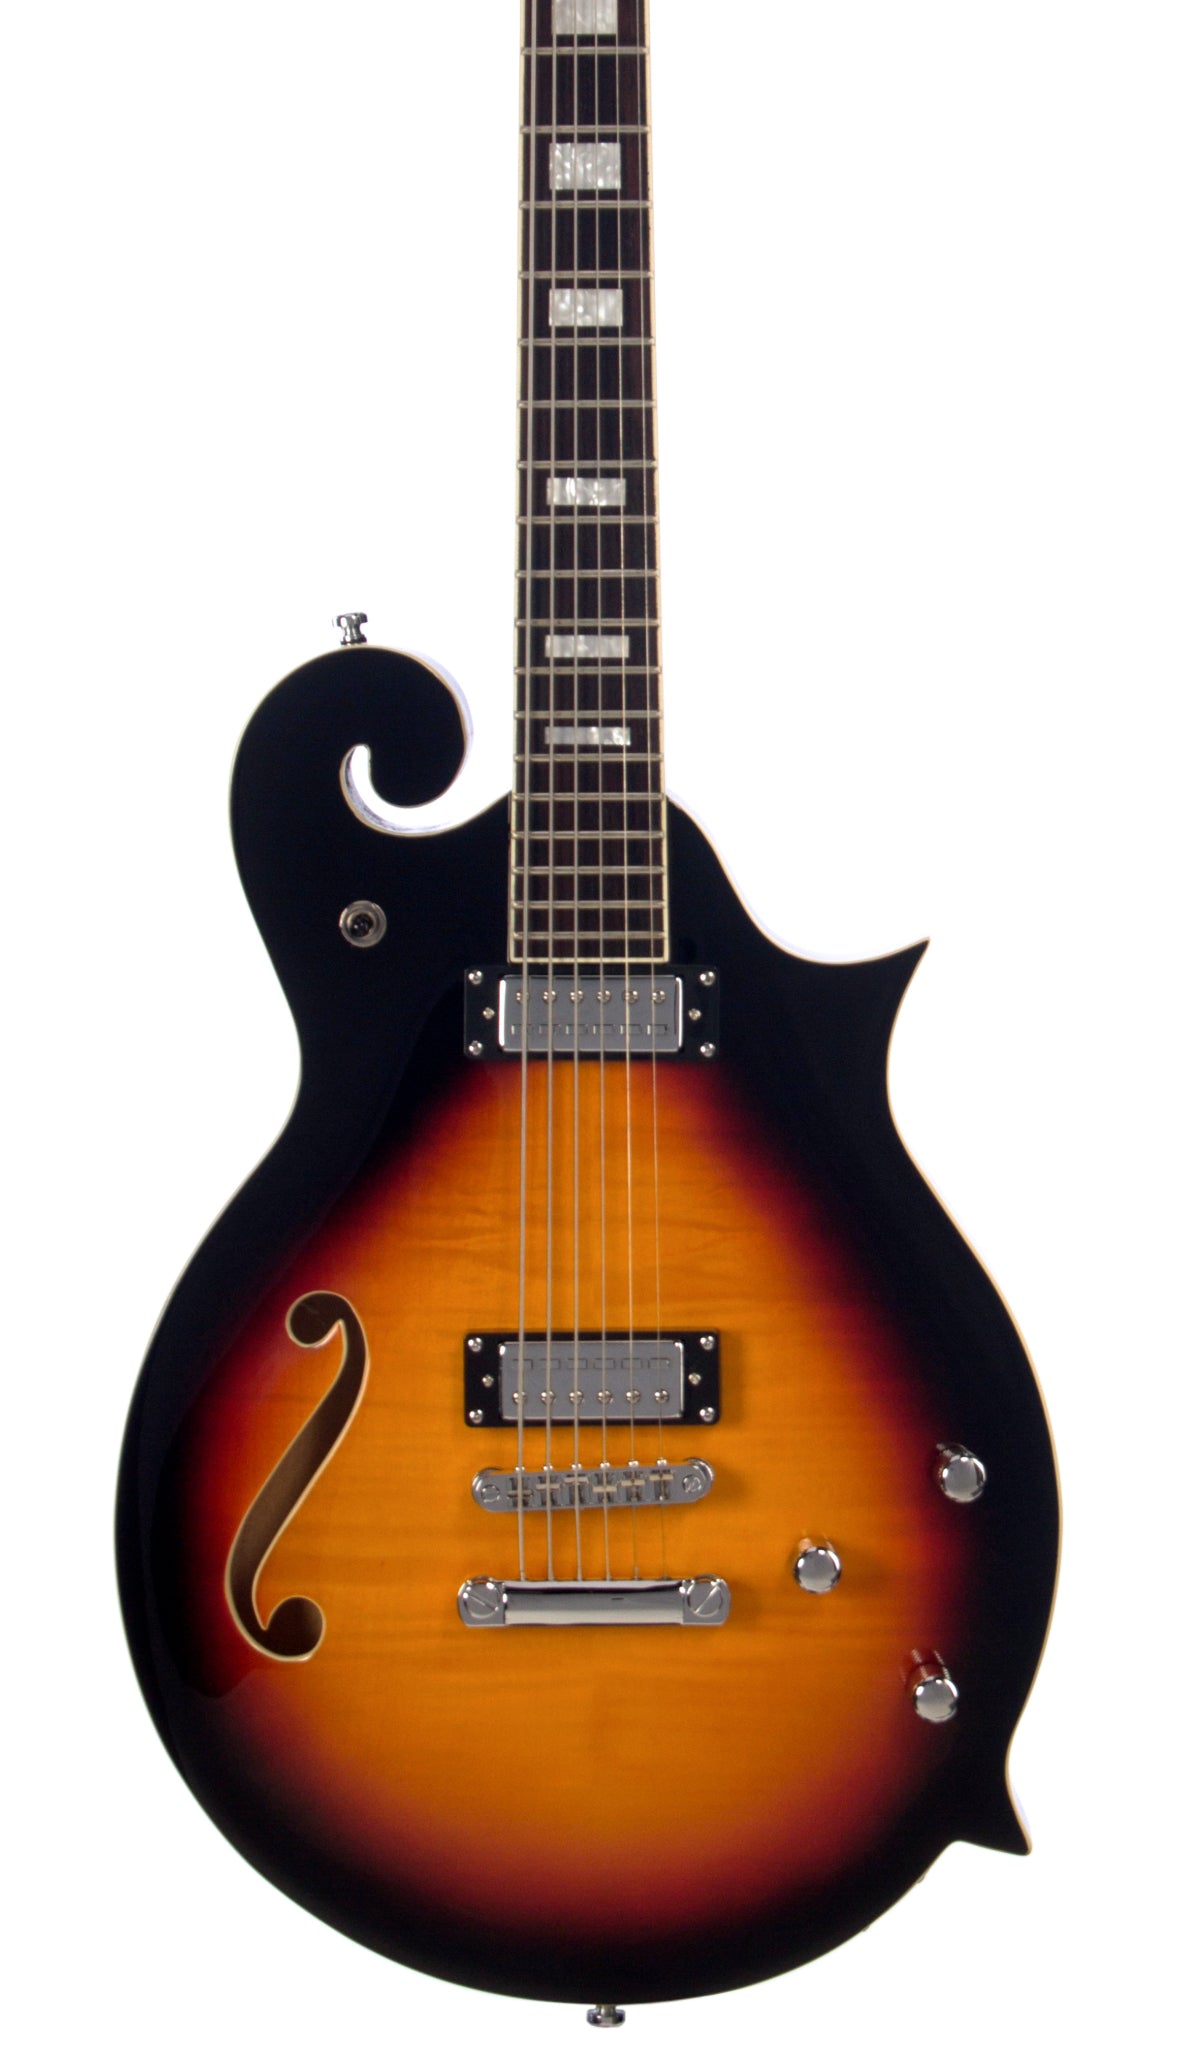 MRG Baritone Guitar